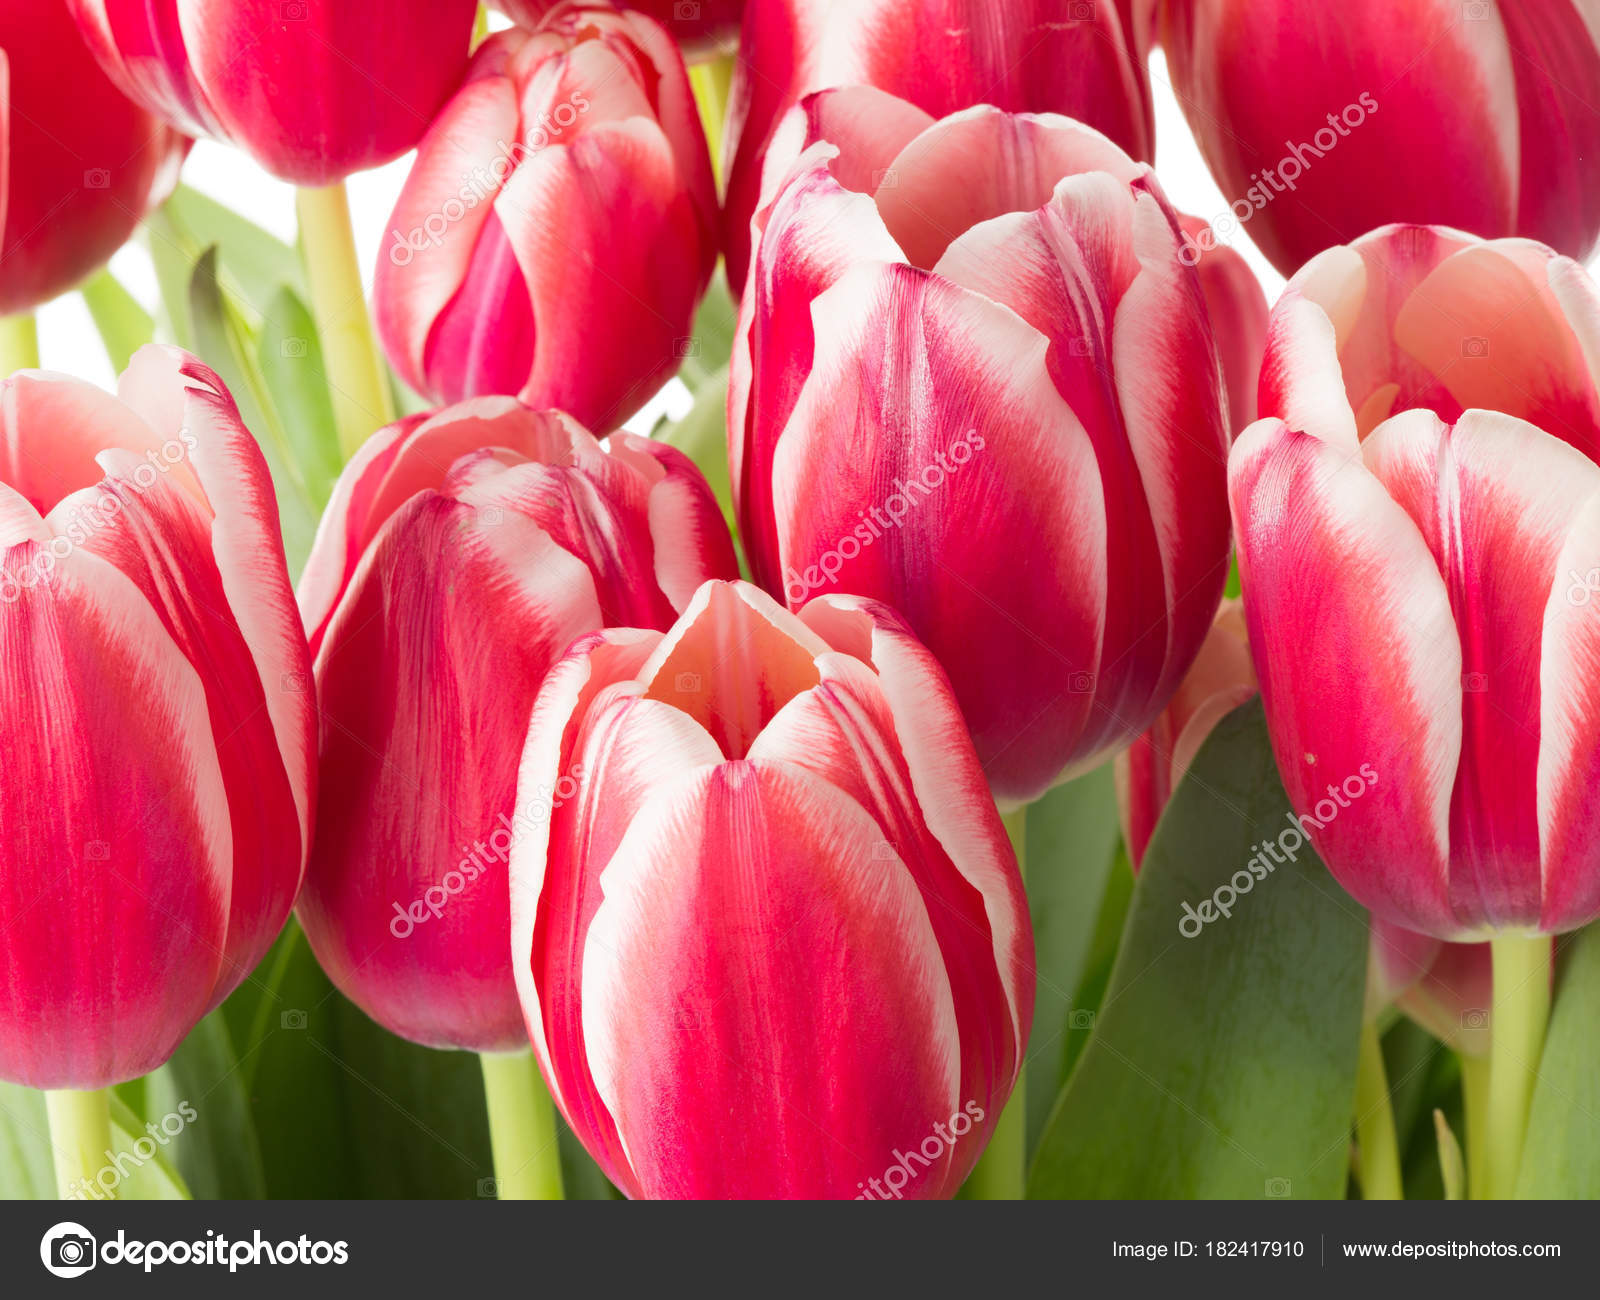 red-white tulips — Stock Photo © andreevaee #182417910